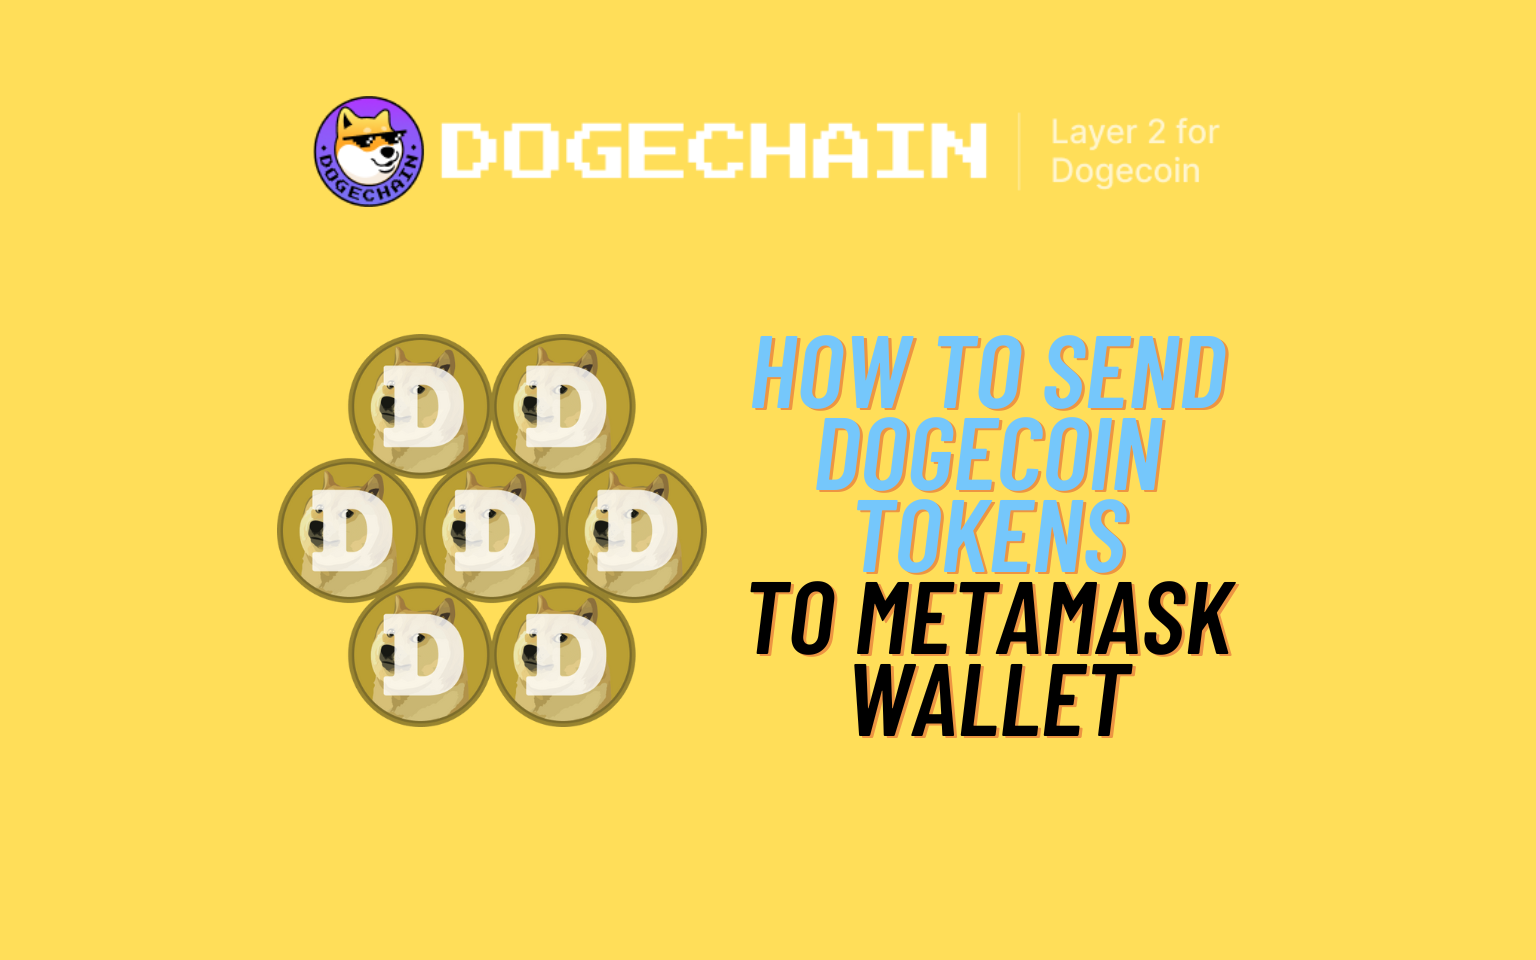 Doge send to Metamask